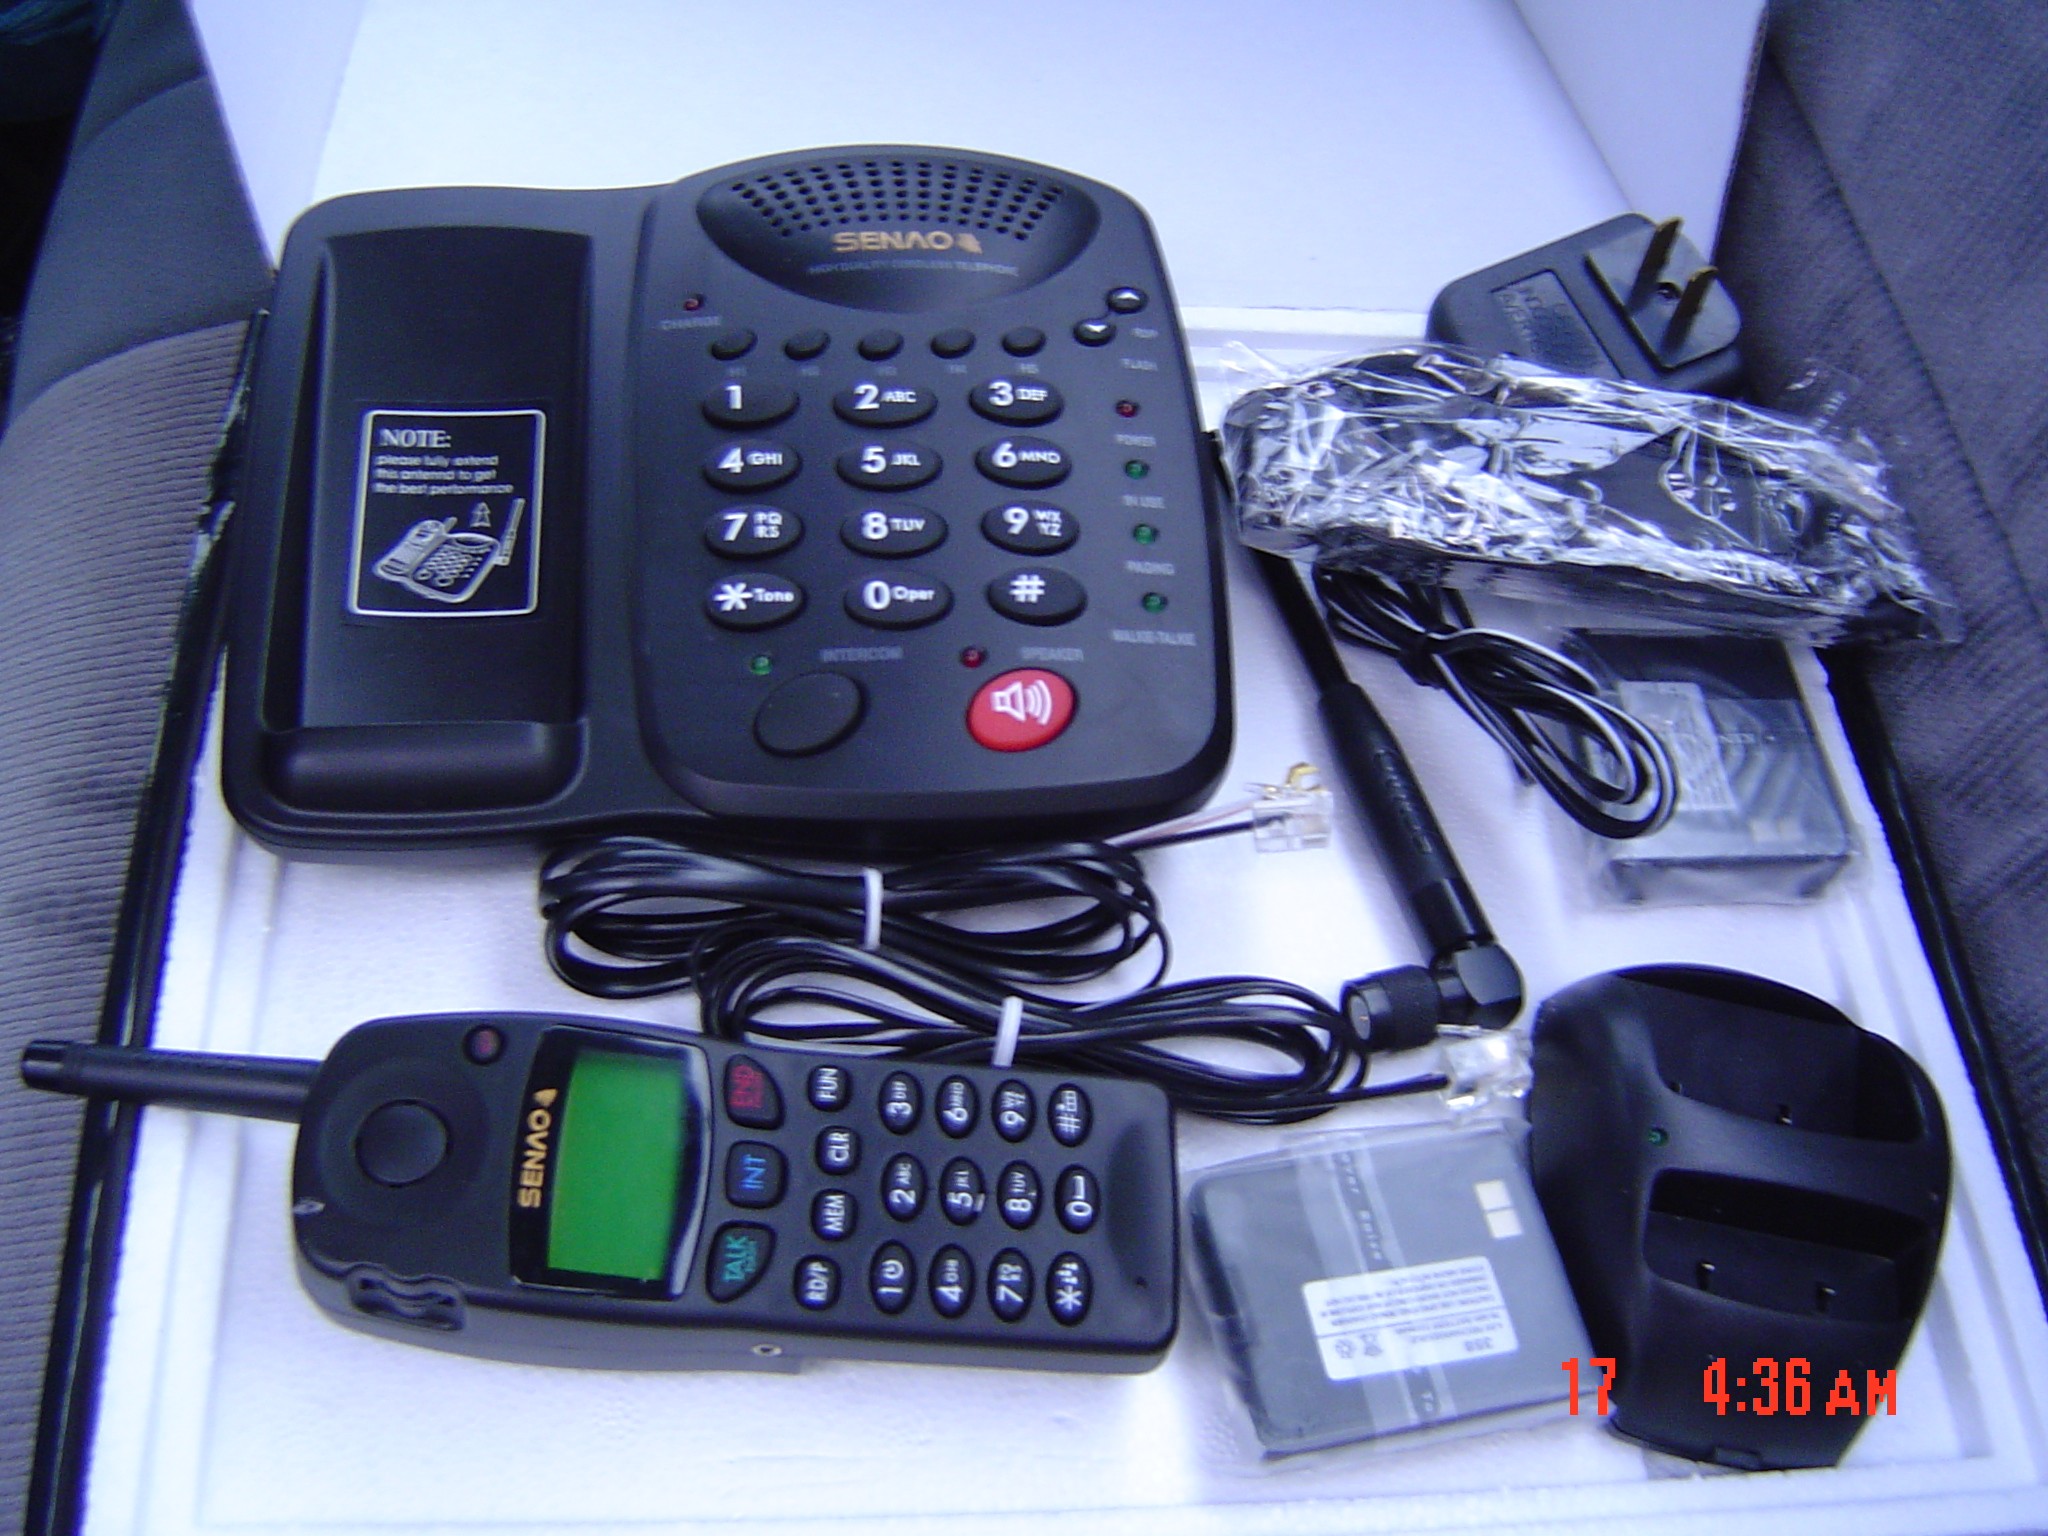 SENAO SN-358 Long Range Distance Cordless Telephone with handset plus org case 